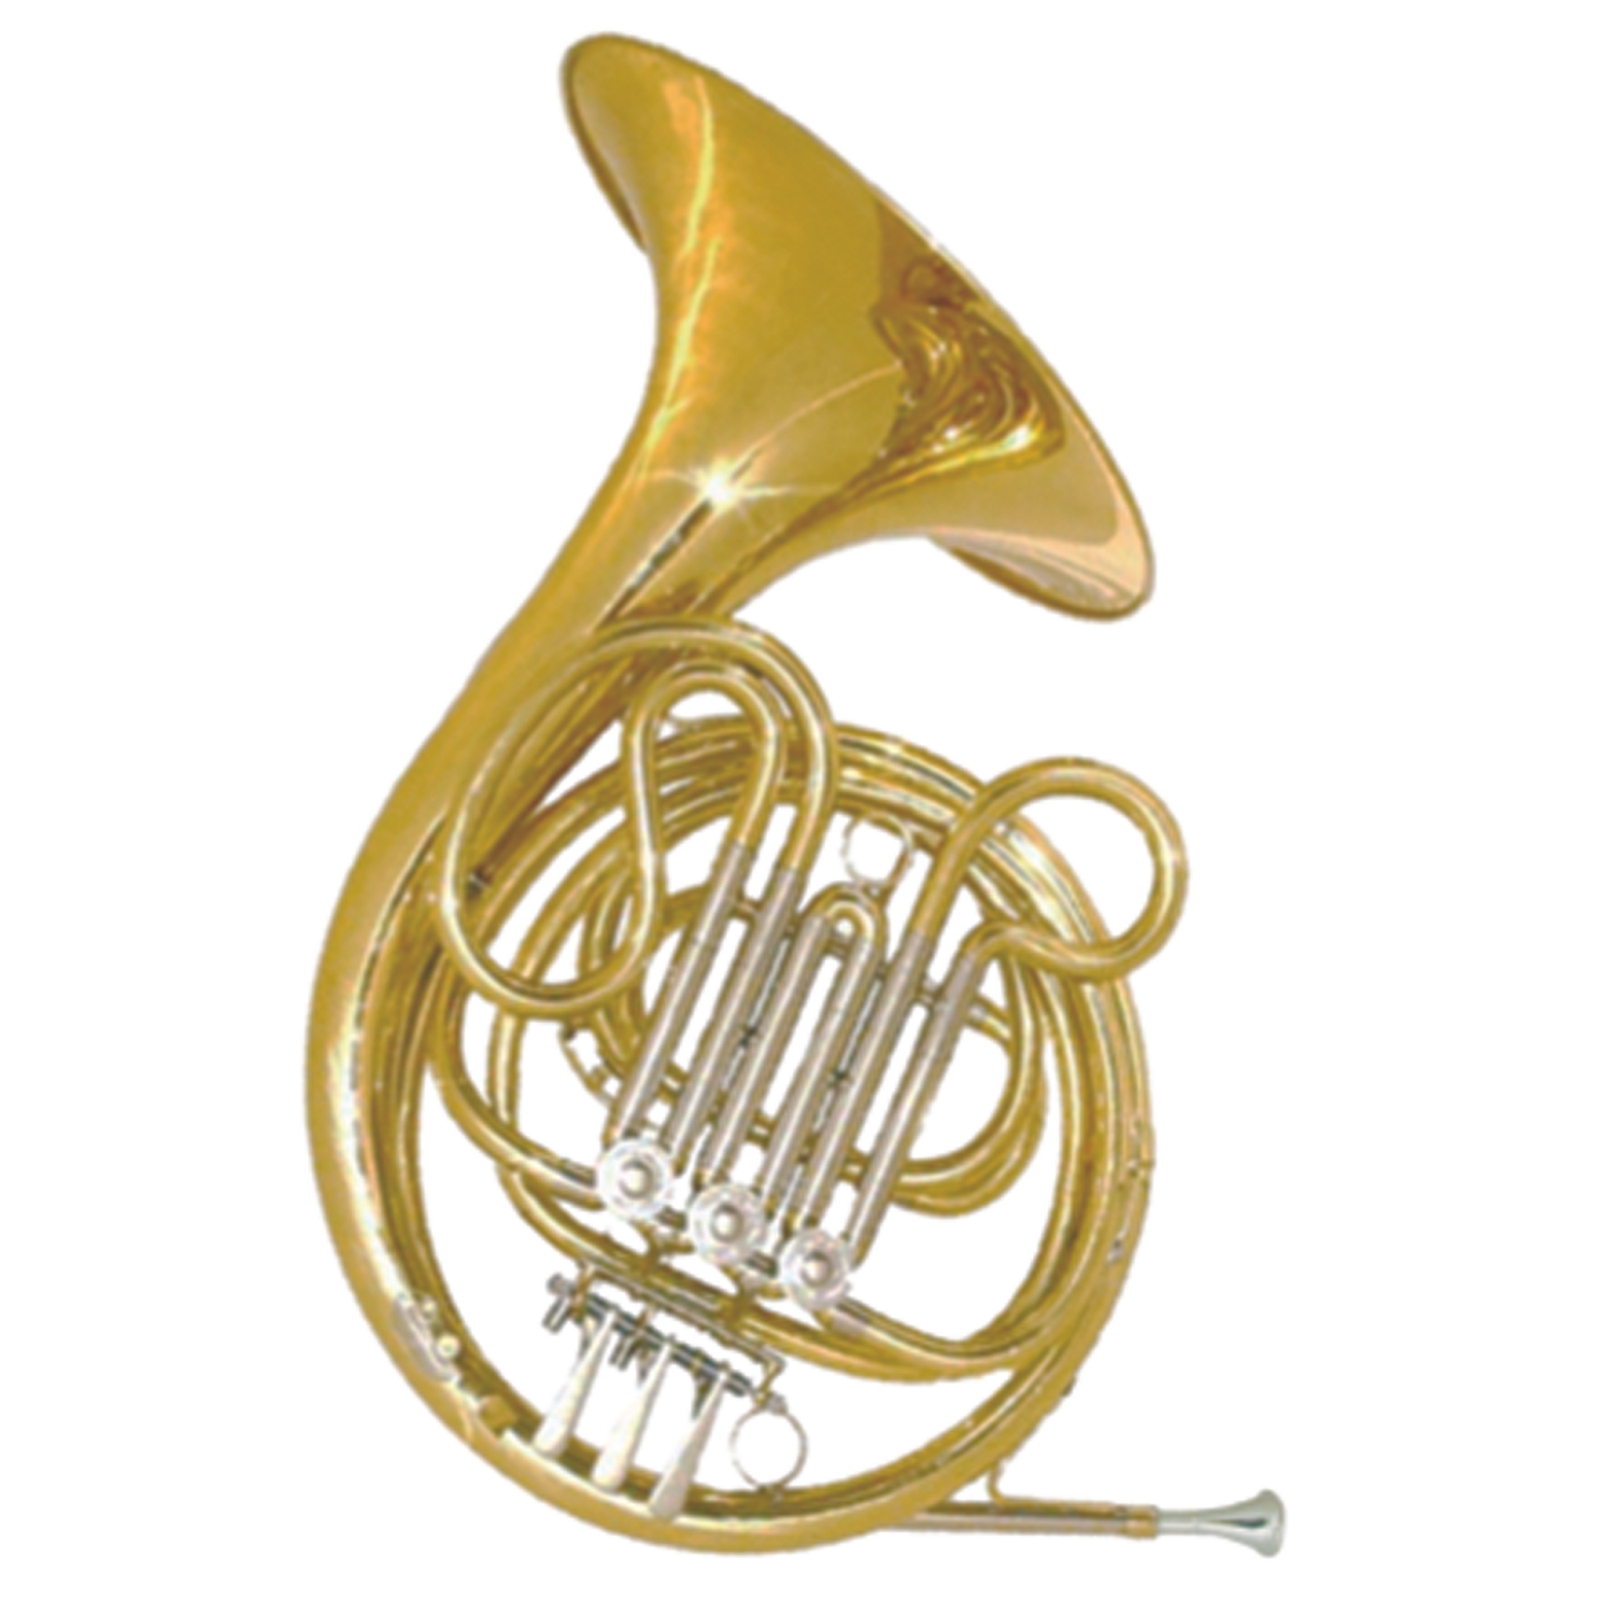 Elkhart 100bfh Single French Horn Bb